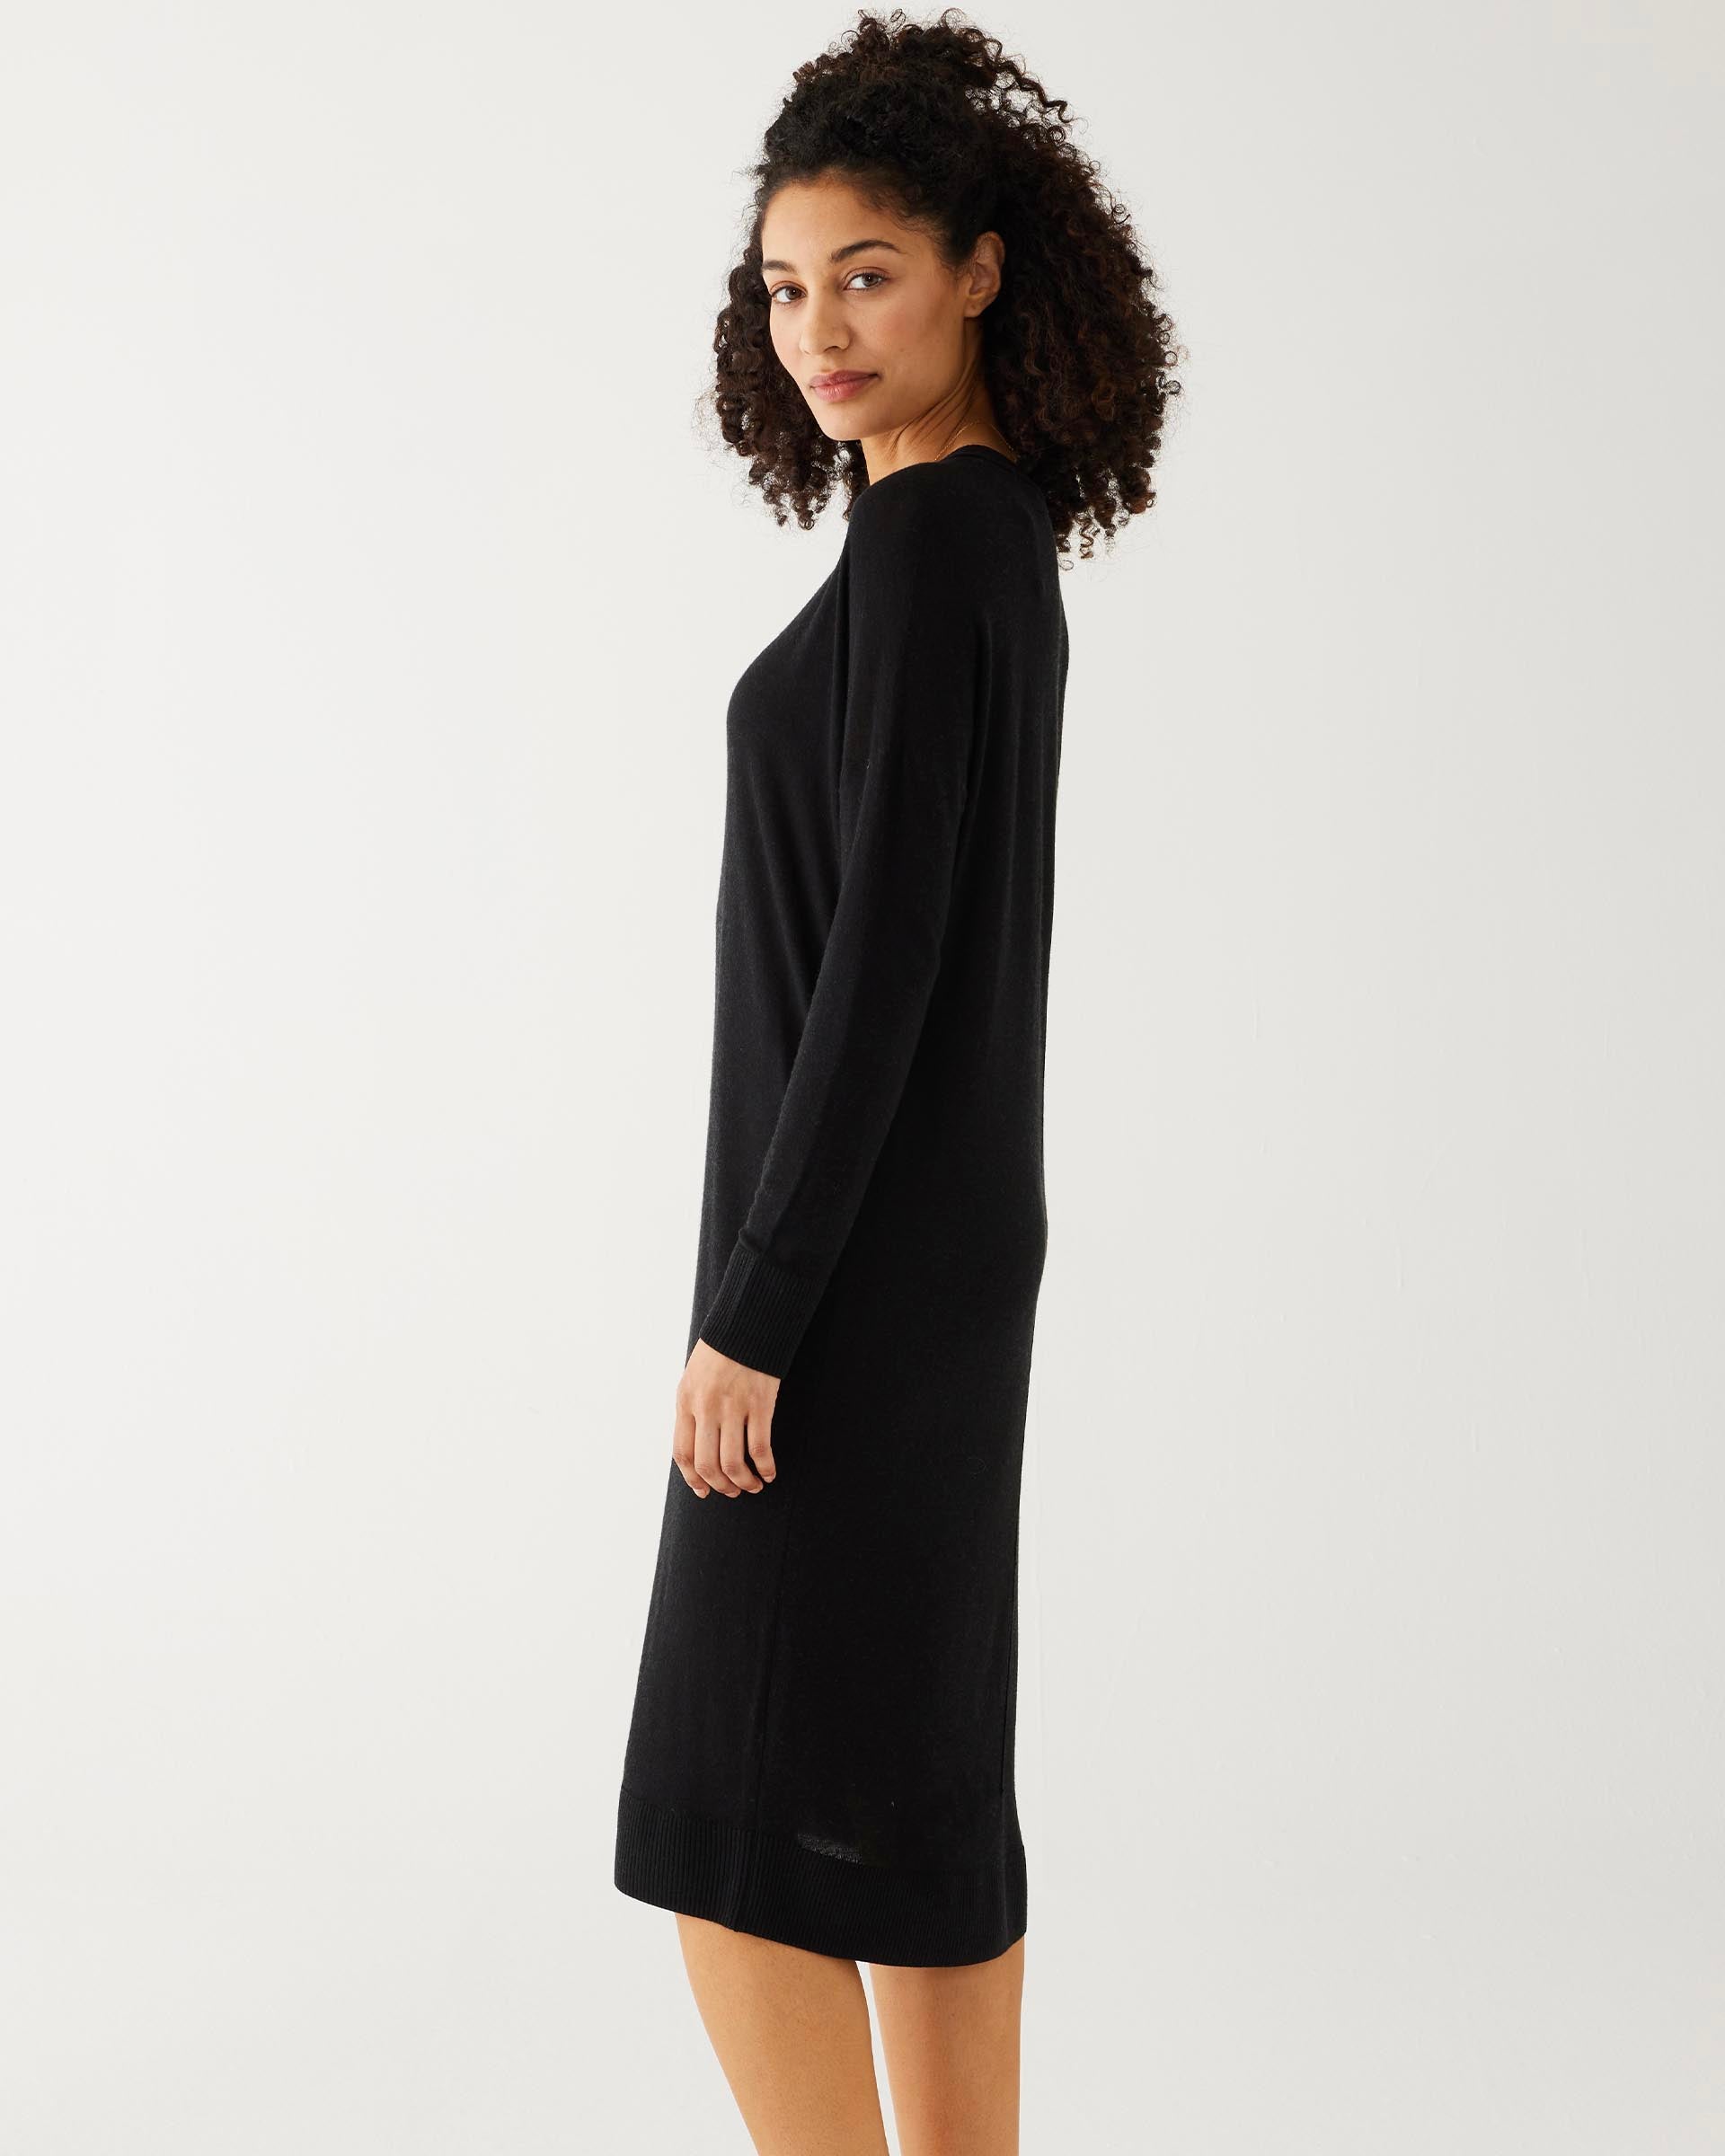 profile of woman showcasing mersea black long sleeve v neck saltwash sweater dress